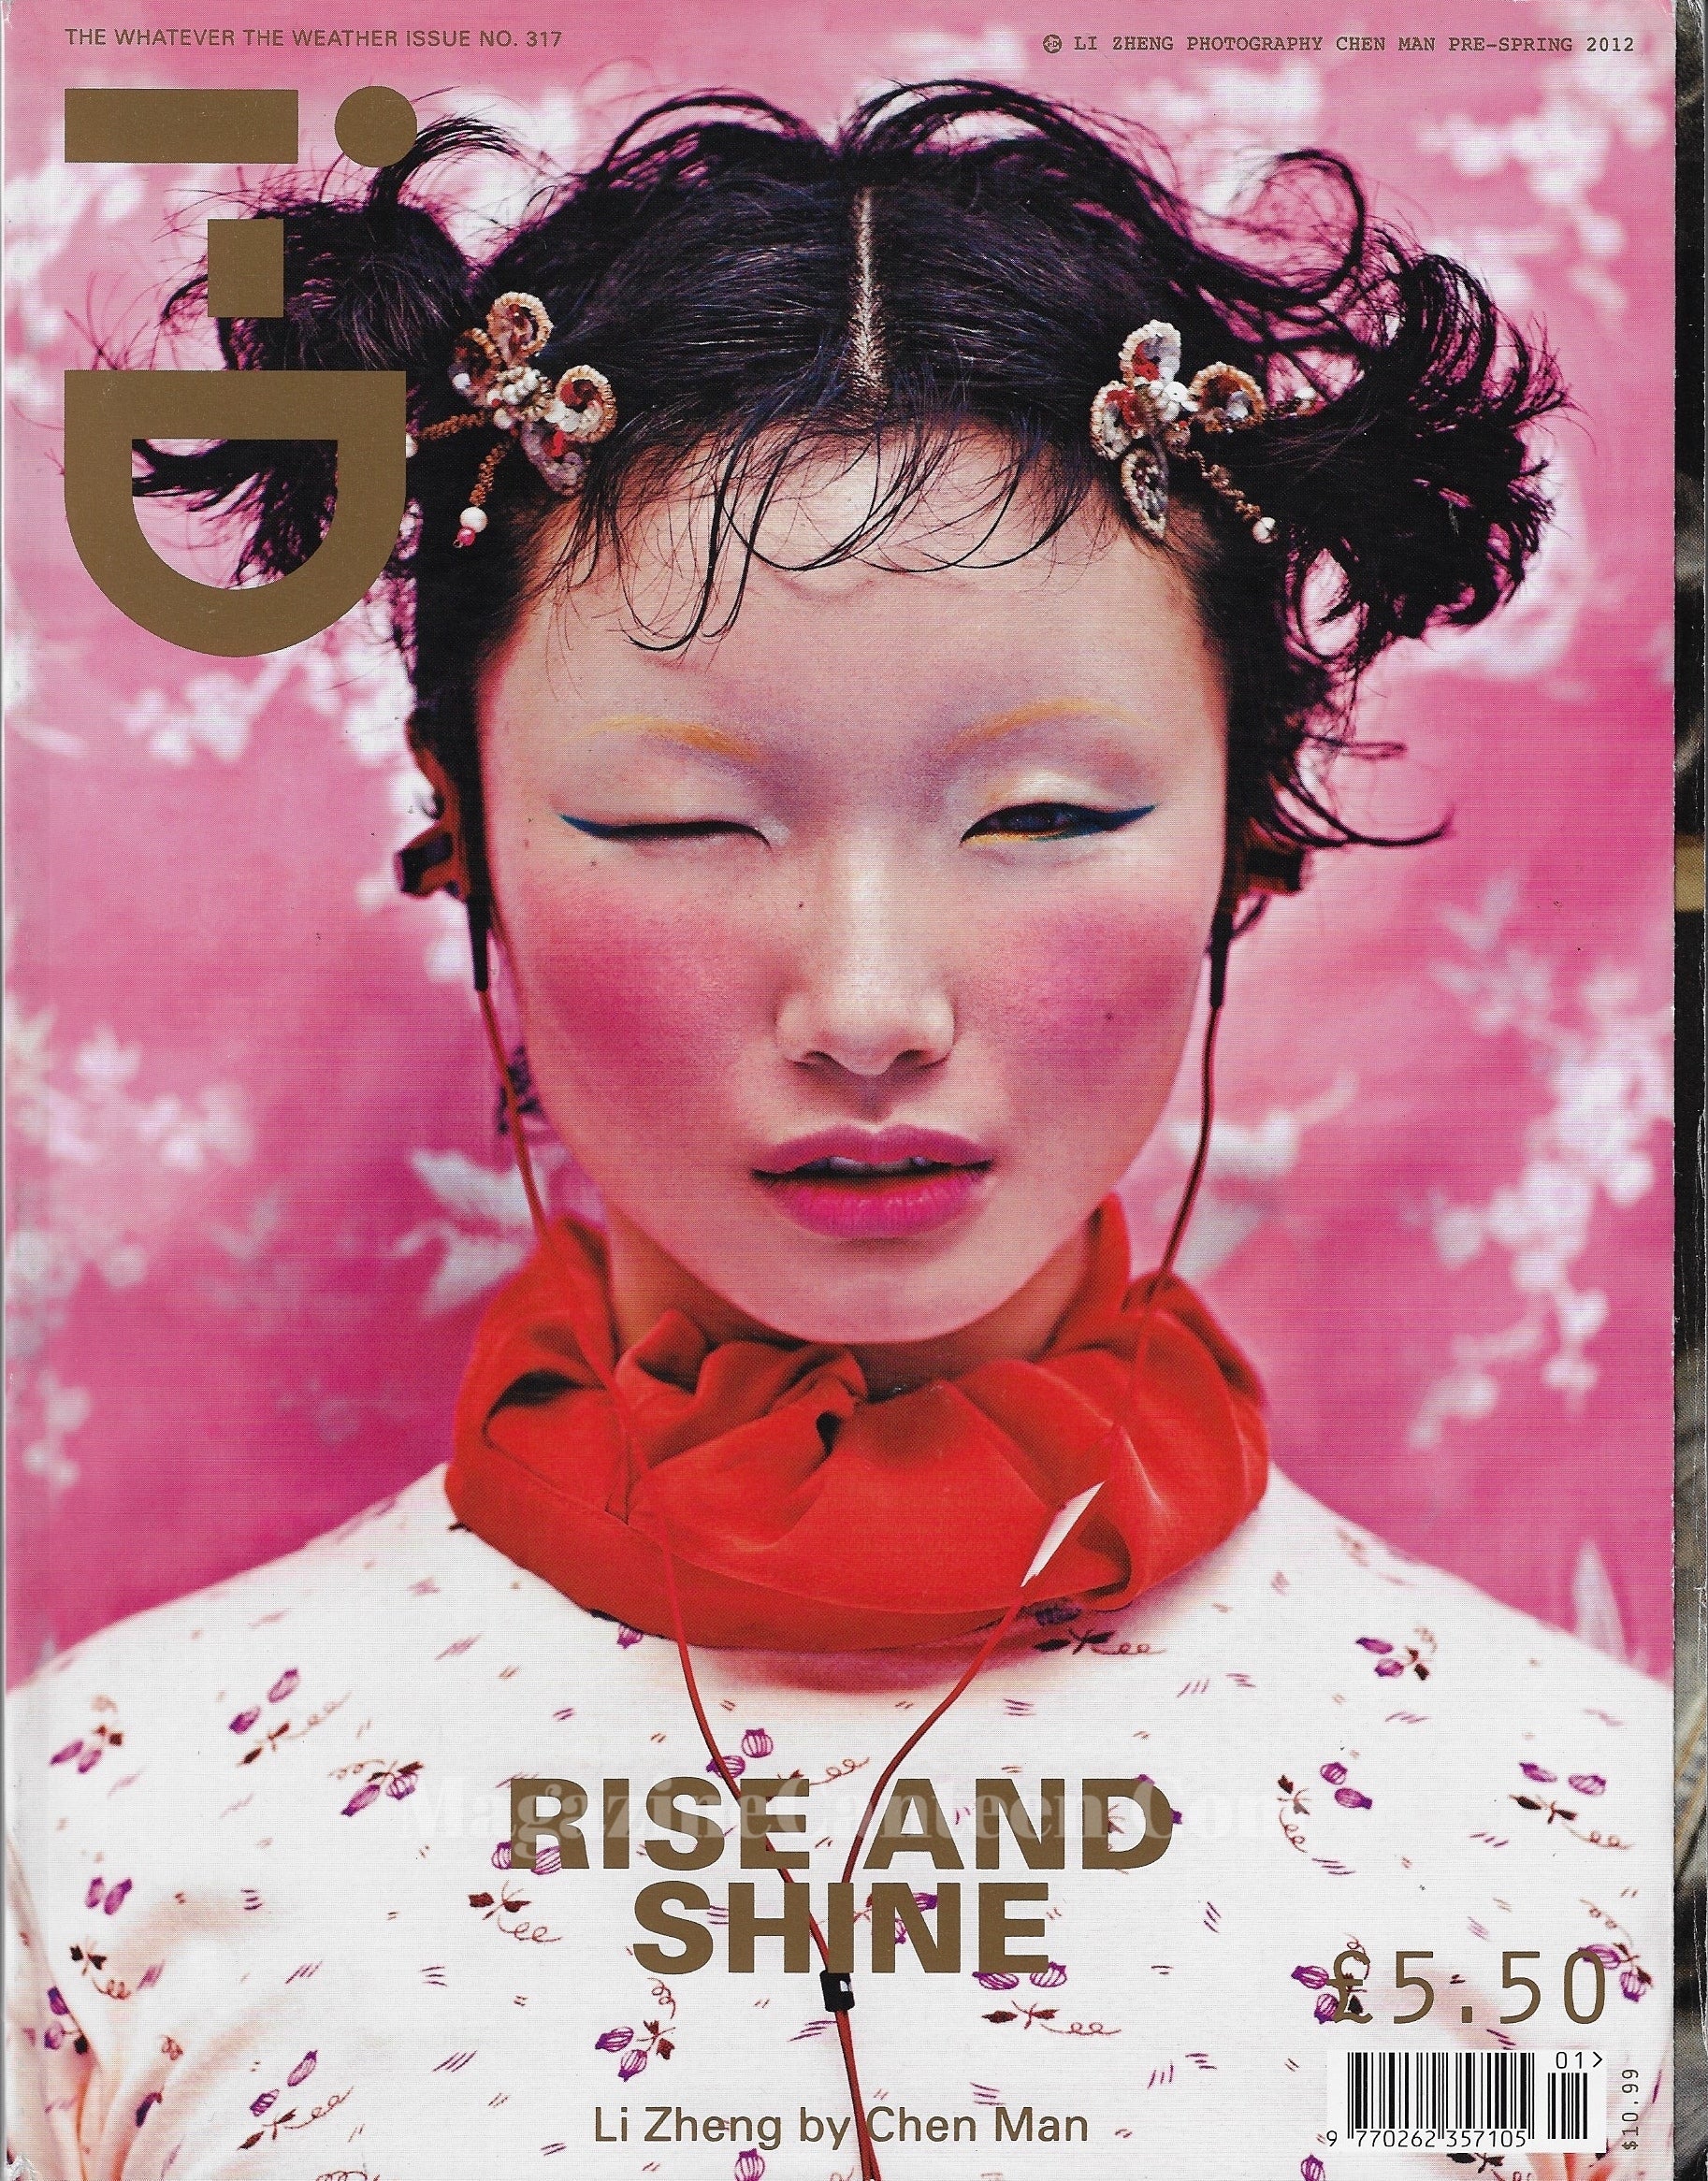 I-D Magazine 317 - Li Zheng 2012